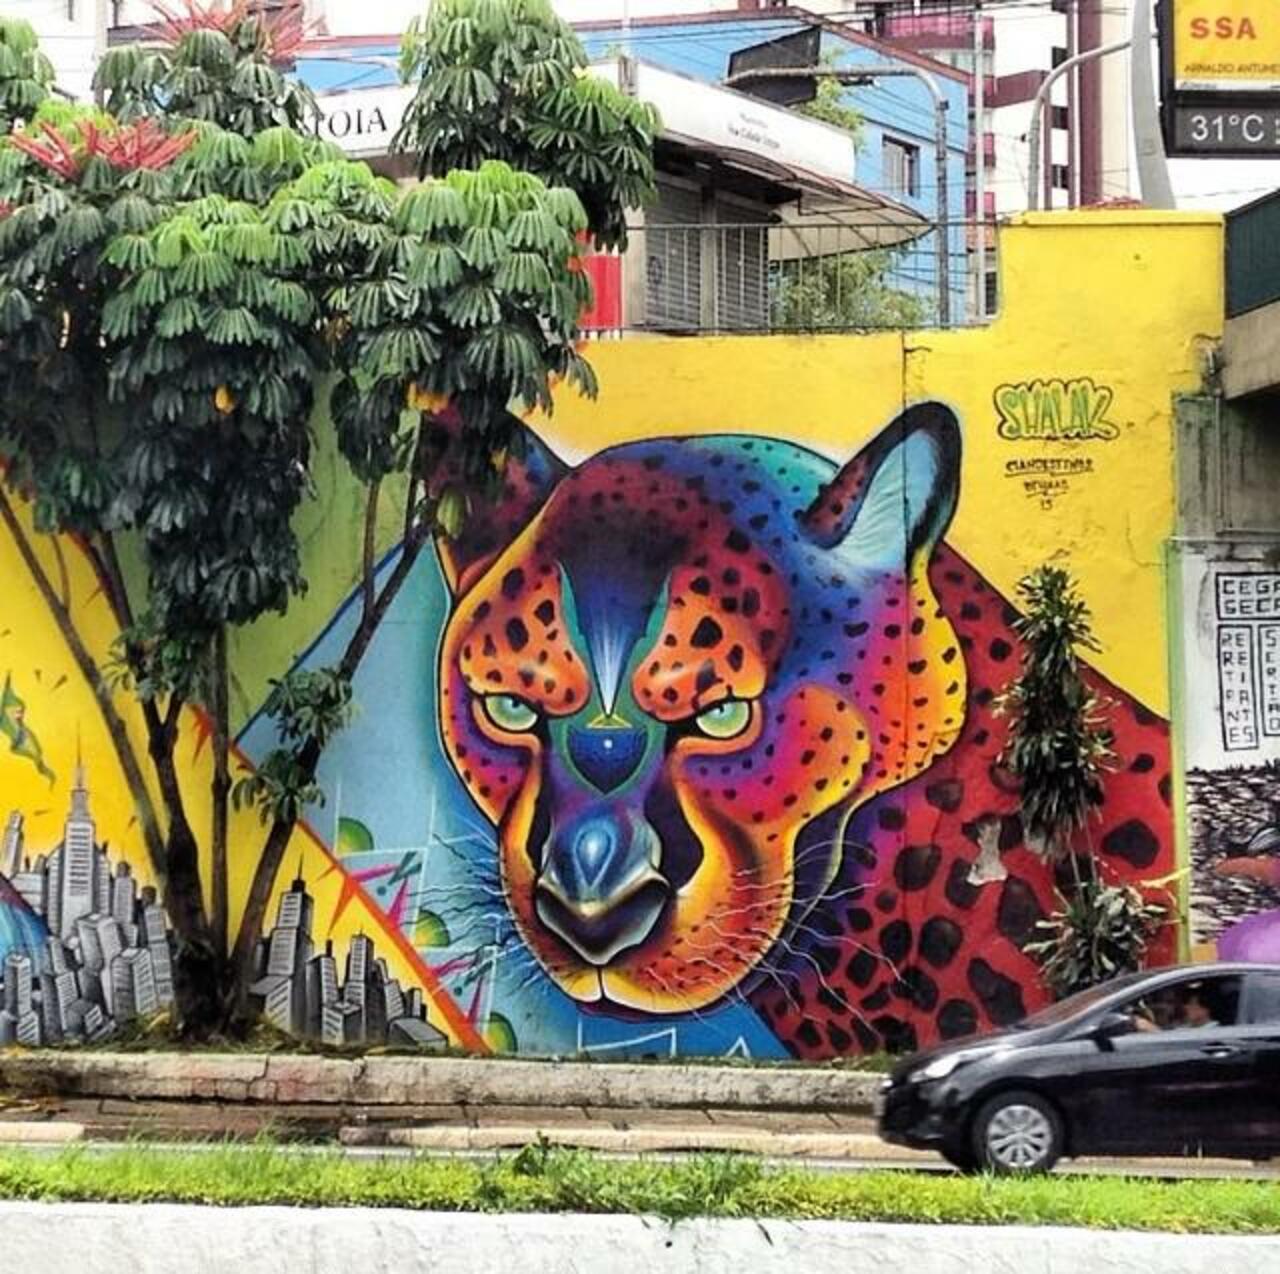 Artist ShalakAttack beautiful & colourful nature in Street Art piece in São Paulo 

#art #graffiti #mural #streetart http://t.co/05nfWawtRP